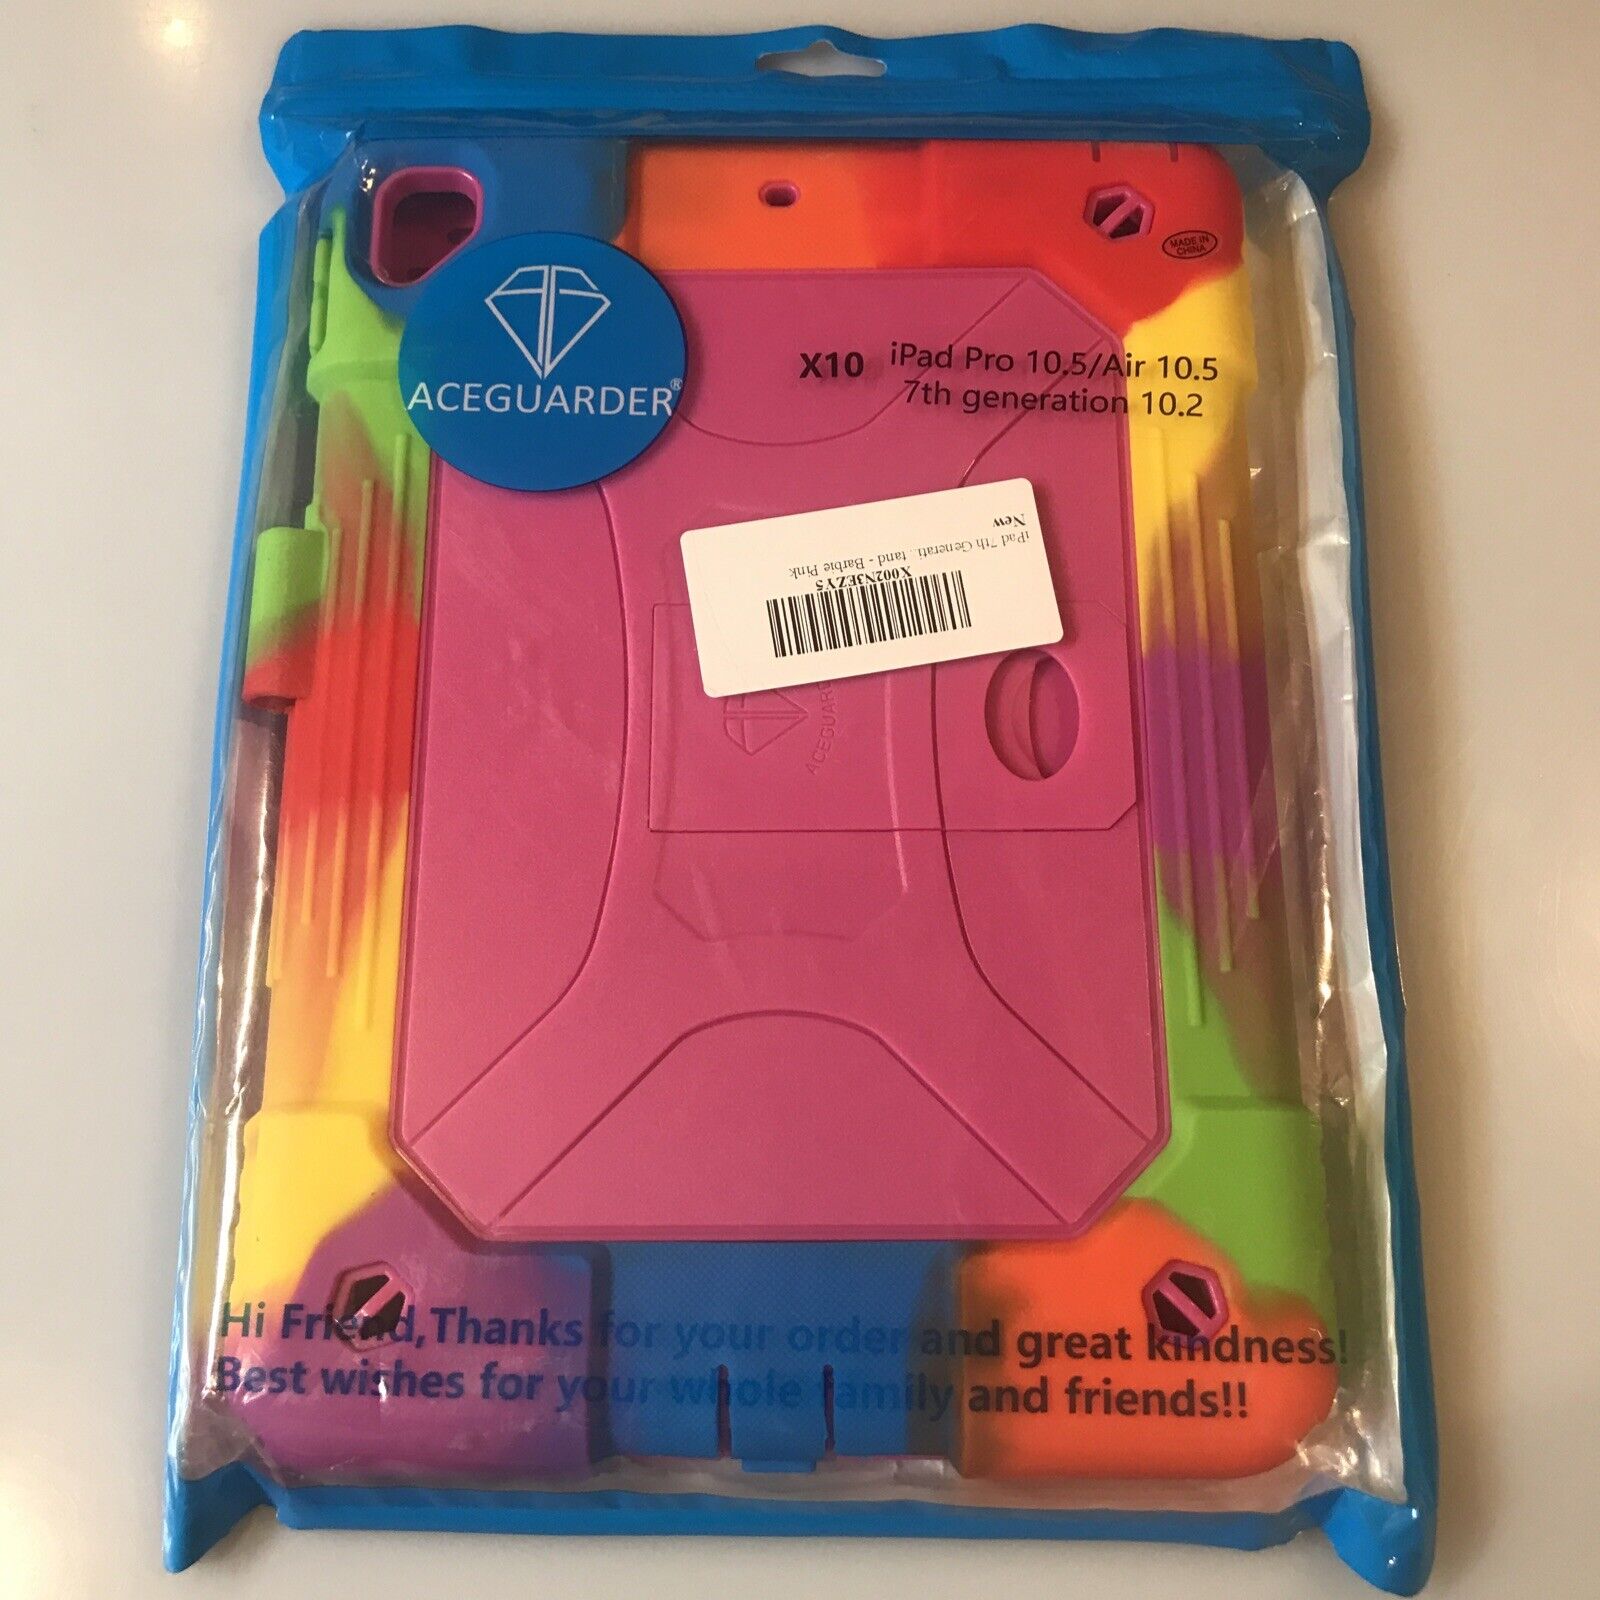 ACEGUARDER iPad case set X10 iPad Pro 10.5/Air 10.5 7th generation 10.2 Tie Dye